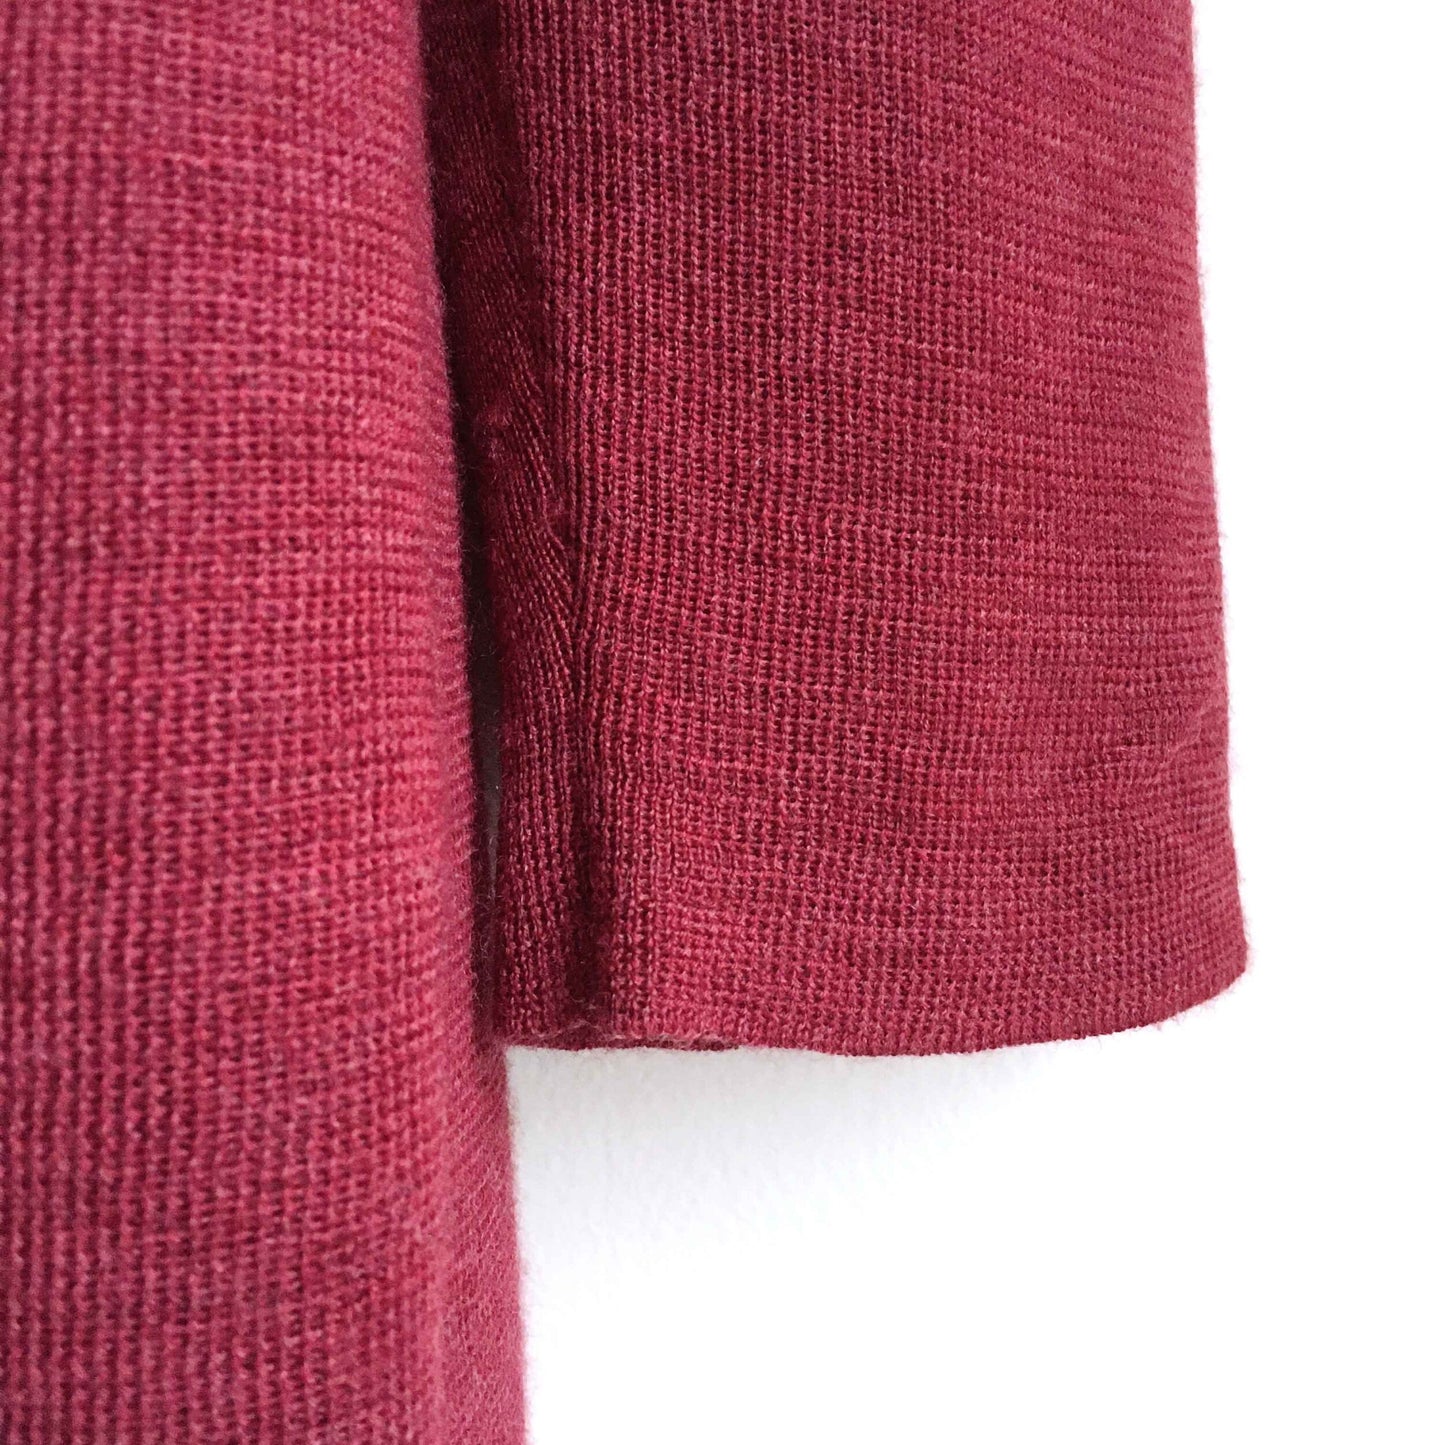 Eileen Fisher merino wool open long cardigan - size Medium